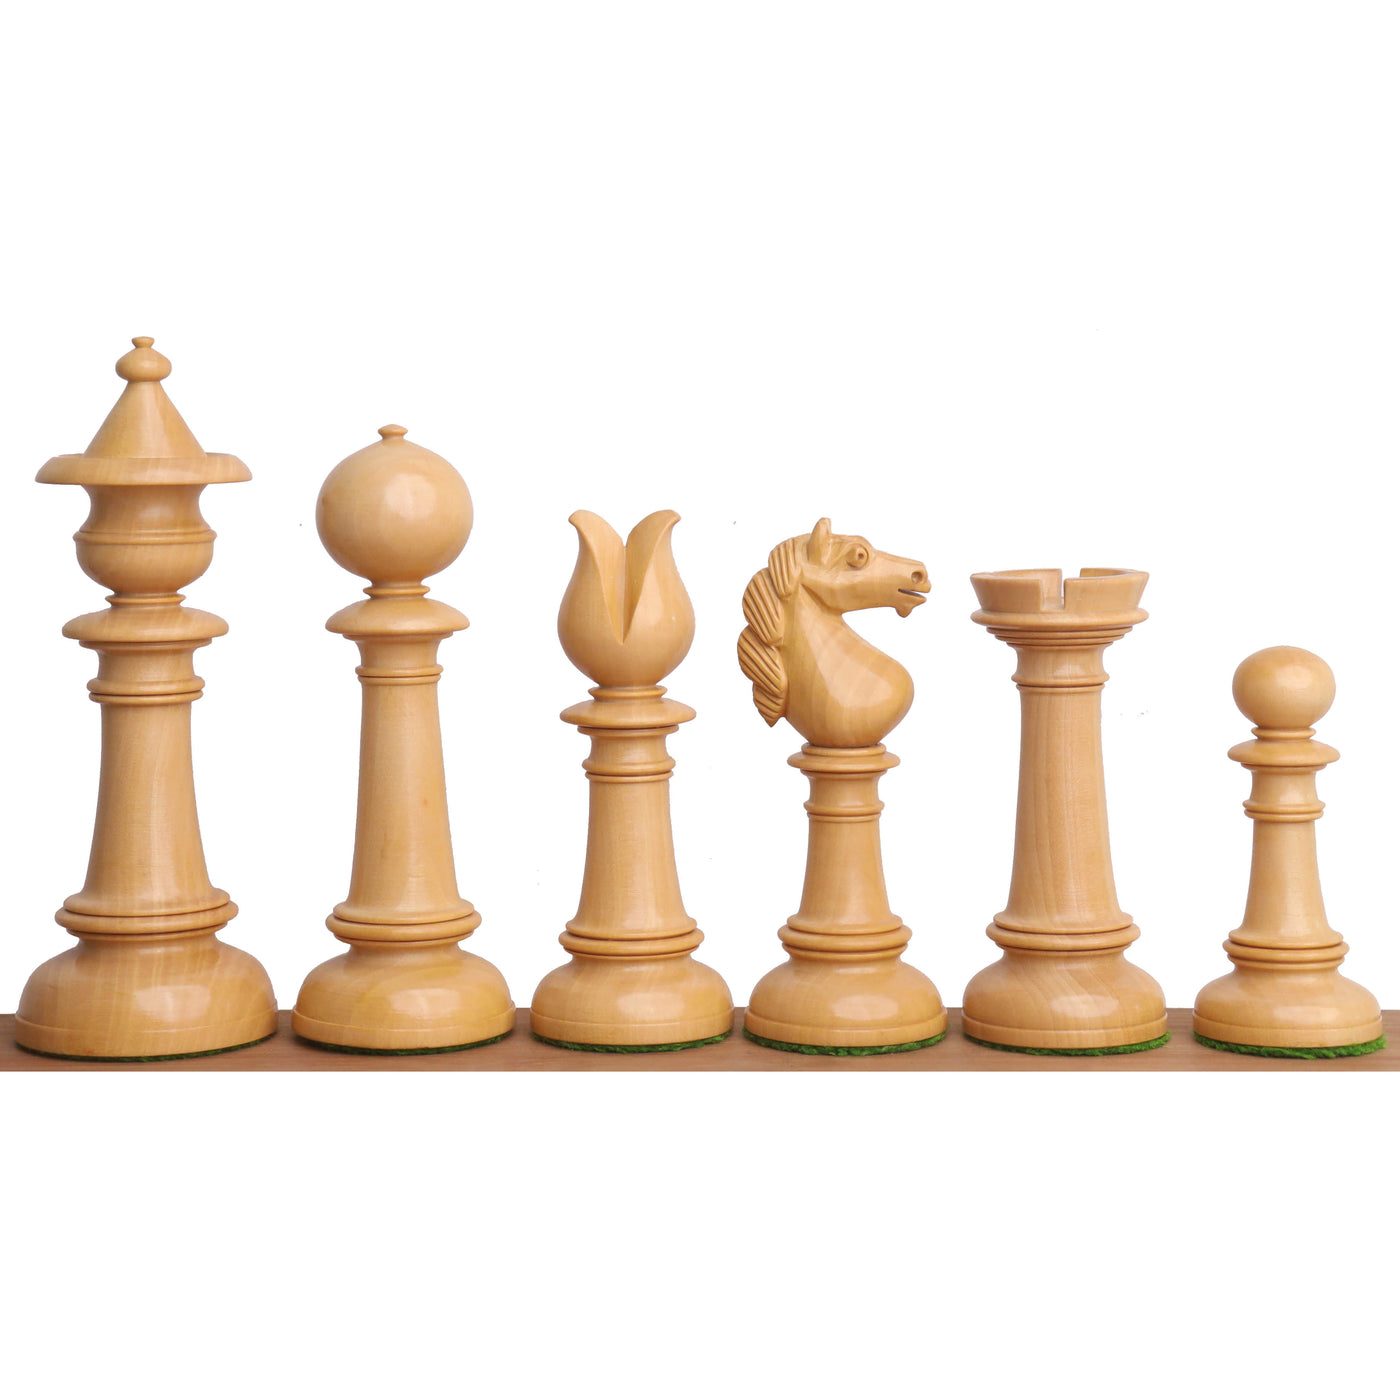 4" Edinburgh Northern Upright Pre-Staunton Chess Set - Chess Pieces Only - Ebony Wood